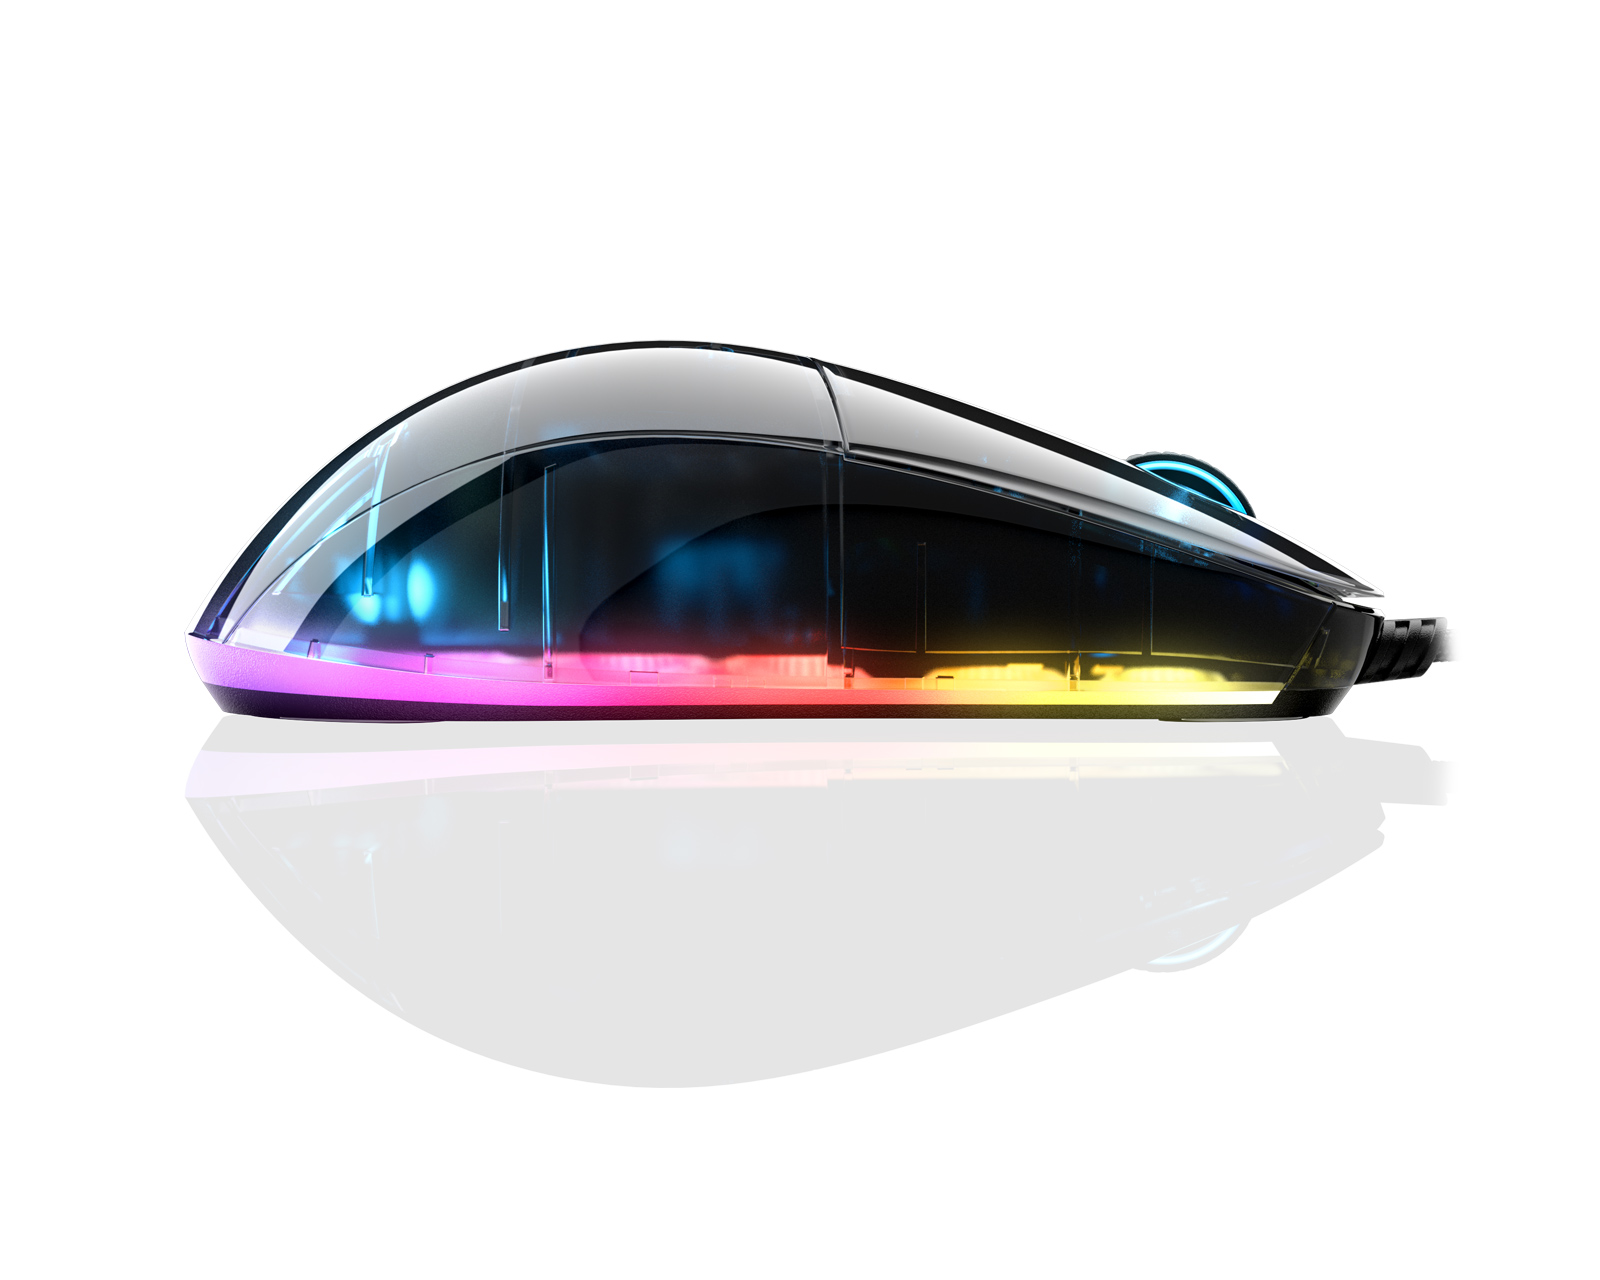 Buy Endgame Gear Xm1 Rgb Gaming Mouse Dark Reflex At Maxgaming Com